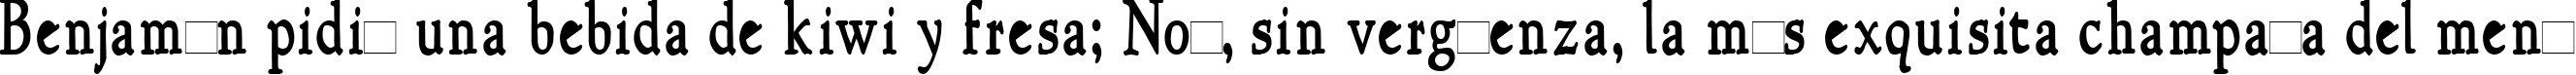 Пример написания шрифтом NewStyleCondensed Bold текста на испанском